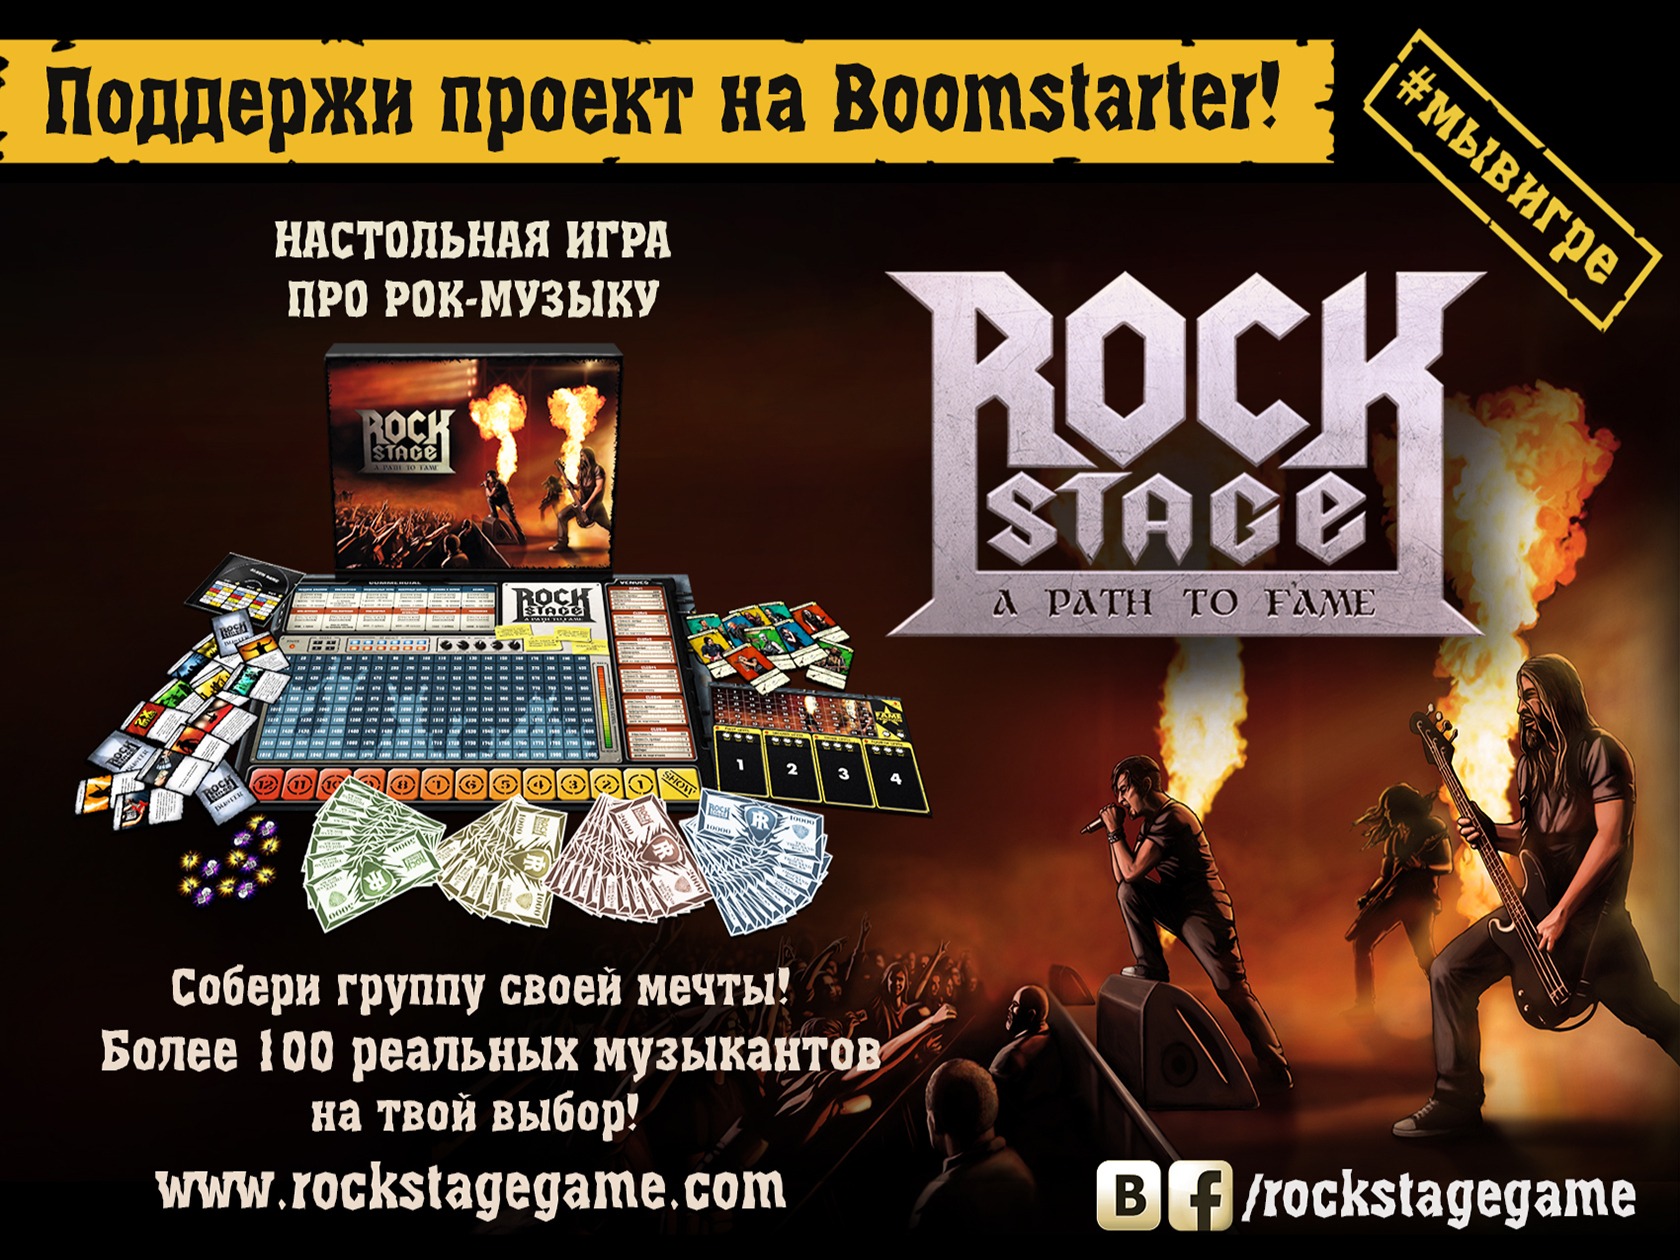 Игры рок группы. Rock Stage: а Path to Fame. Rock Stage игра. Настольная игра Rock Stage: а Path to Fame. Настольная игра для музыкантов.